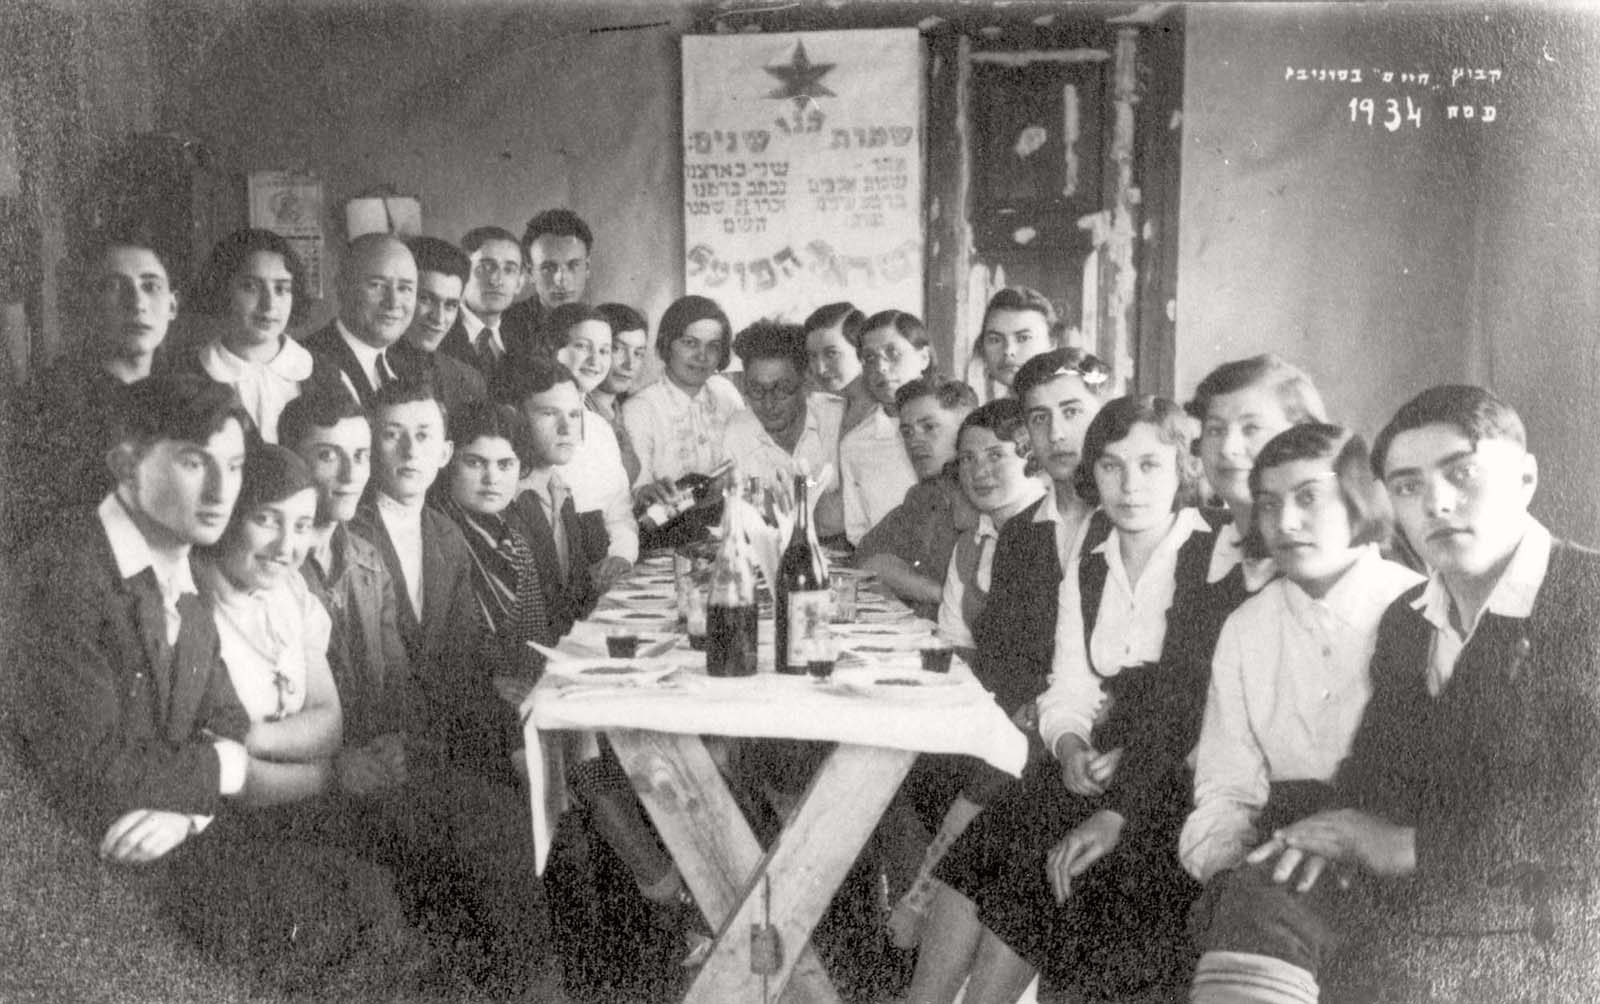 Panevezys, Lituania, Pésaj 1934, kibutz urbano “Jaim”. Entre los sentados: Zelda Charit, segunda desde la derecha. Rivka Shub es la séptima desde la izquierda, con blusa clara.